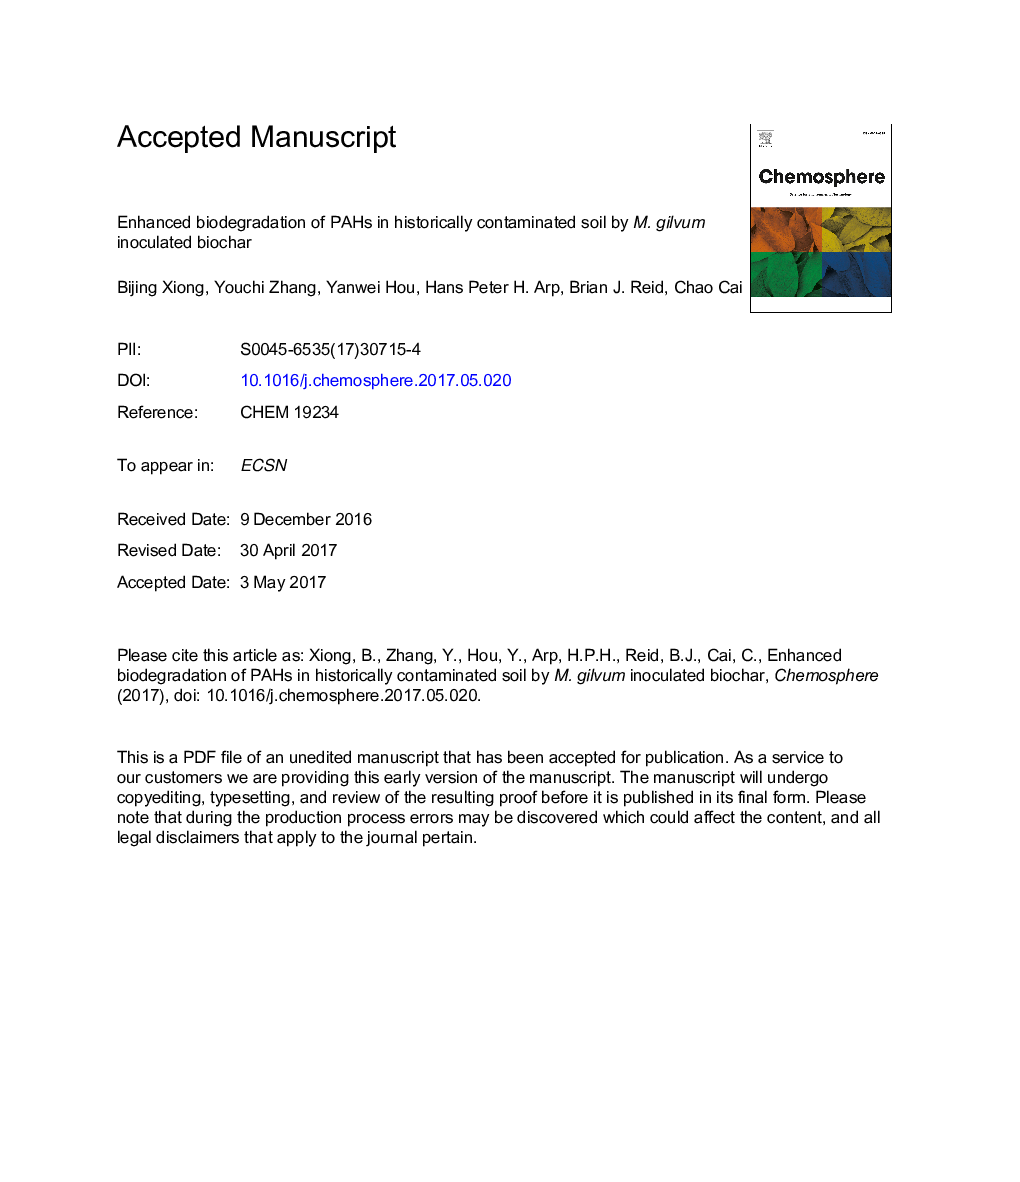 Enhanced biodegradation of PAHs in historically contaminated soil by M.Â gilvum inoculated biochar